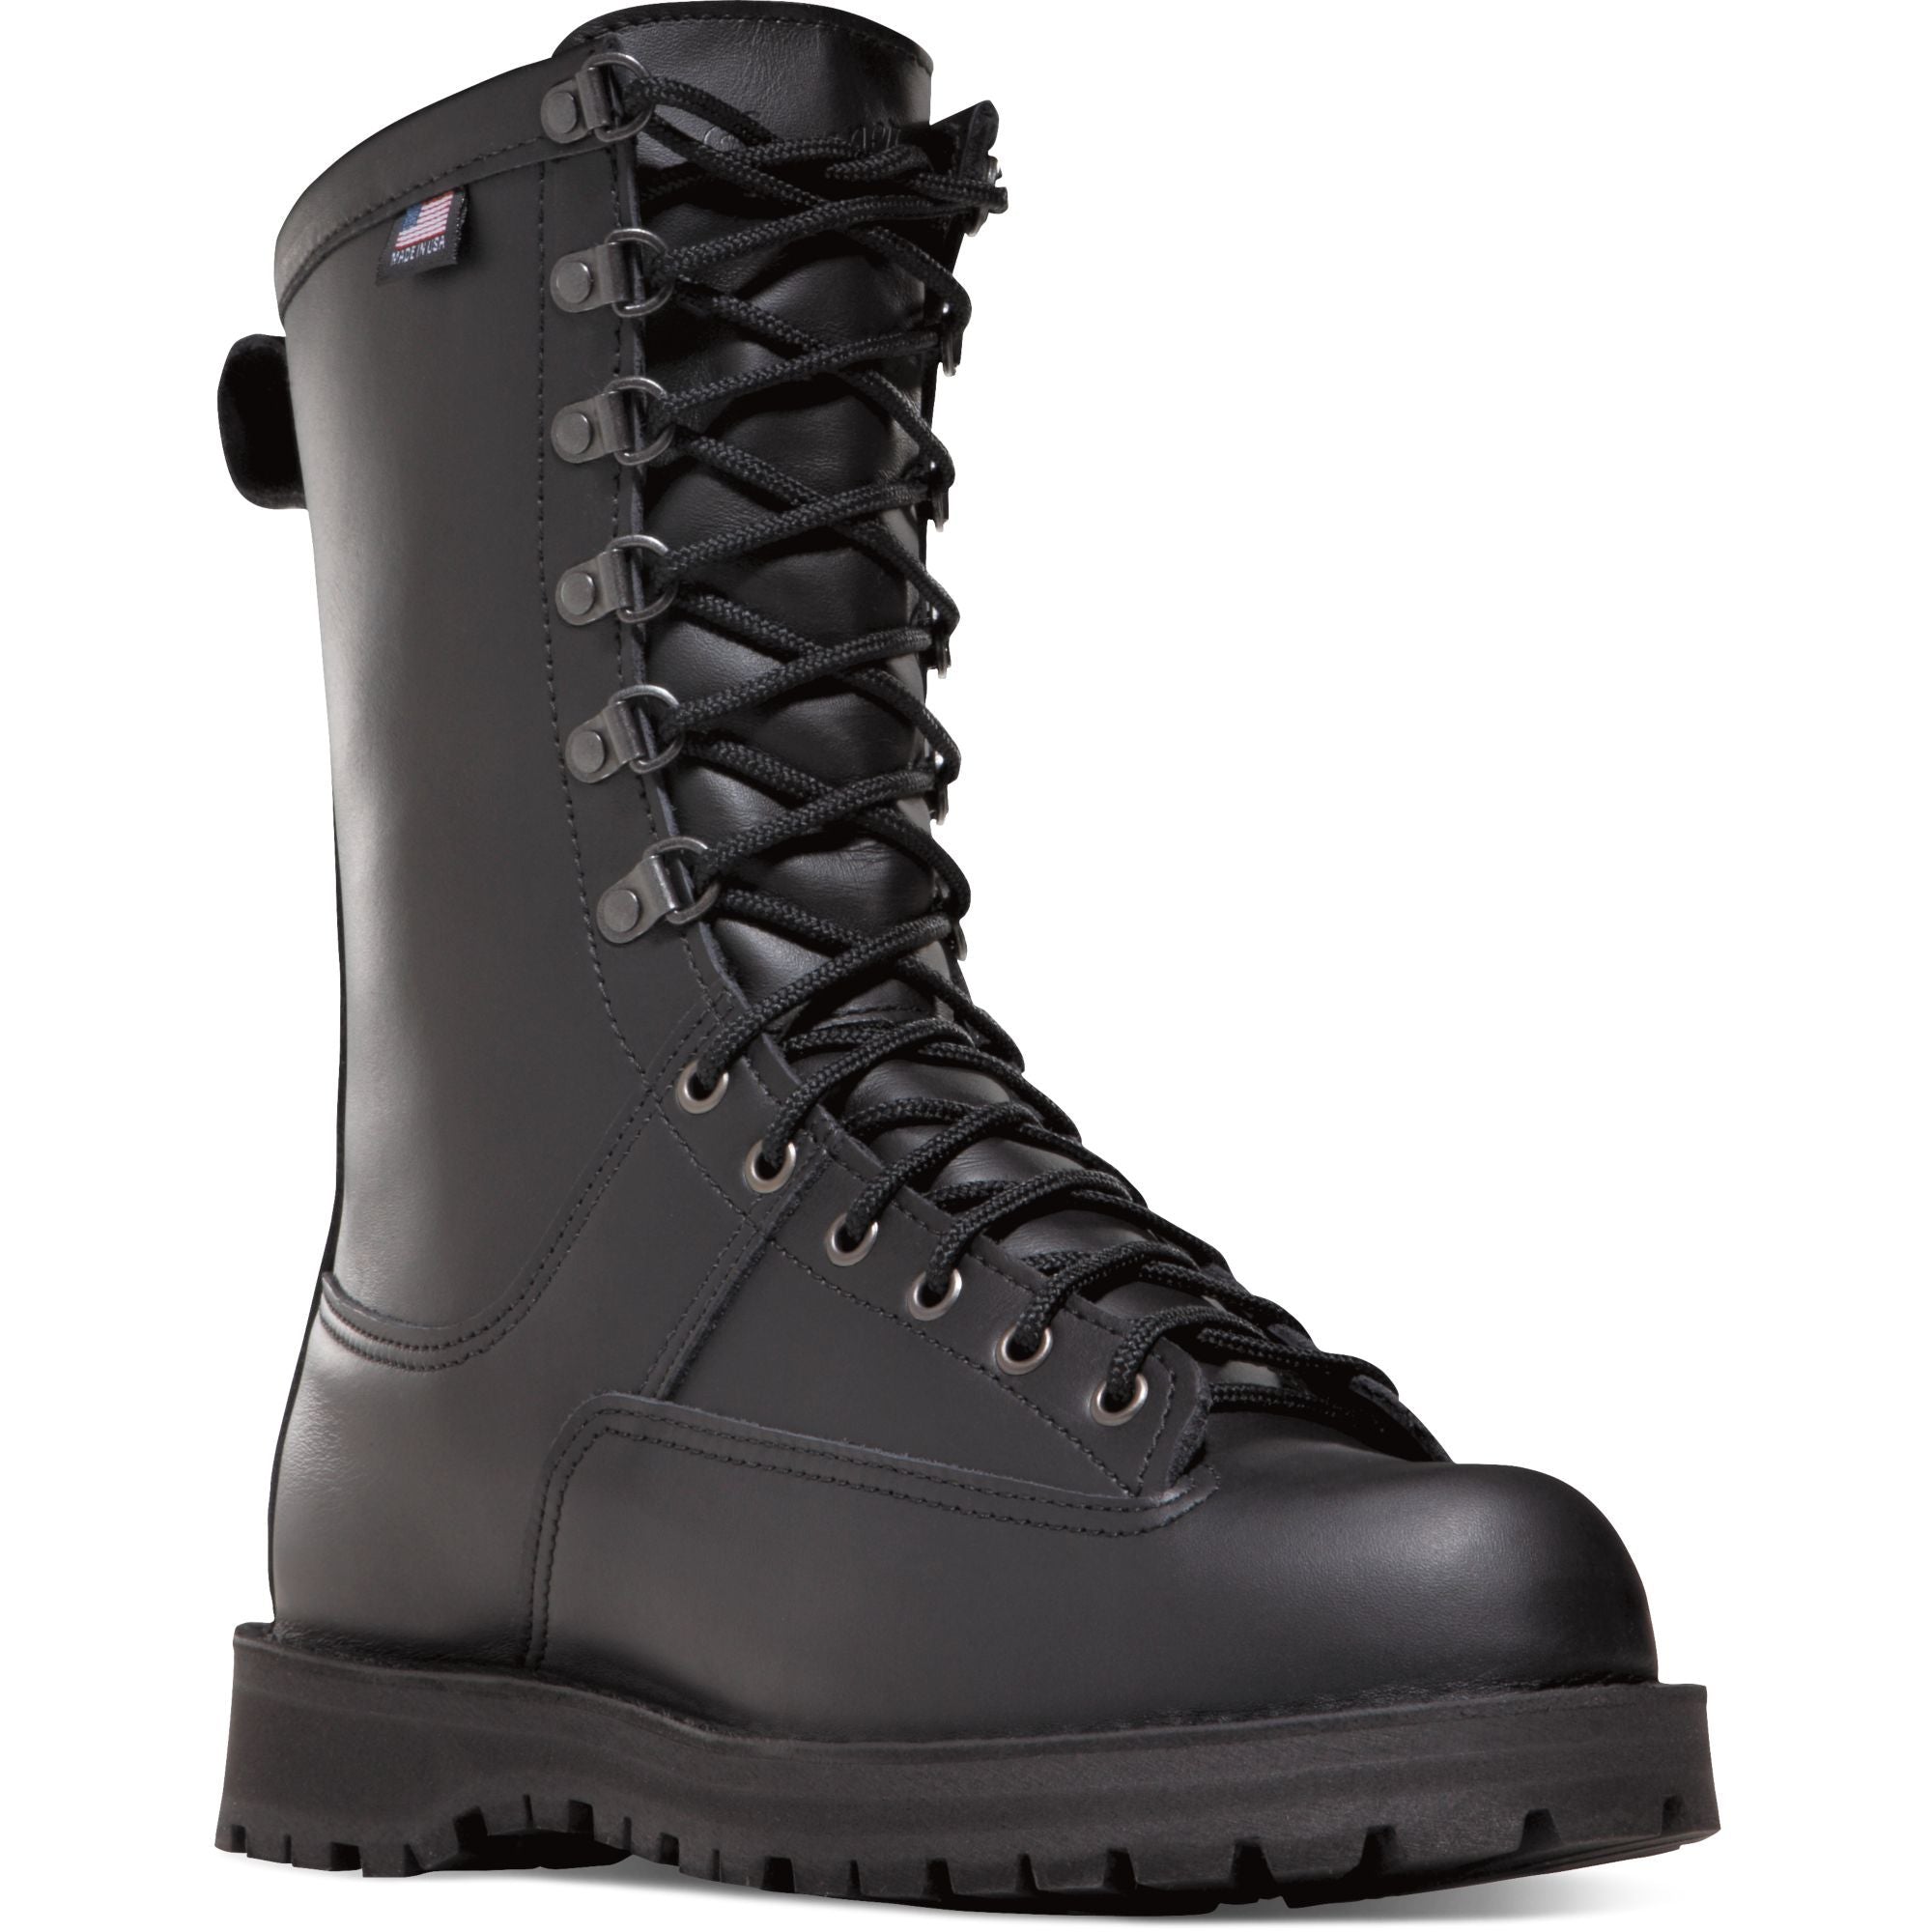 Danner Men's Fort Lewis USA Made 10" WP Duty Boot - Black - 29110 7 / Medium / Black - Overlook Boots